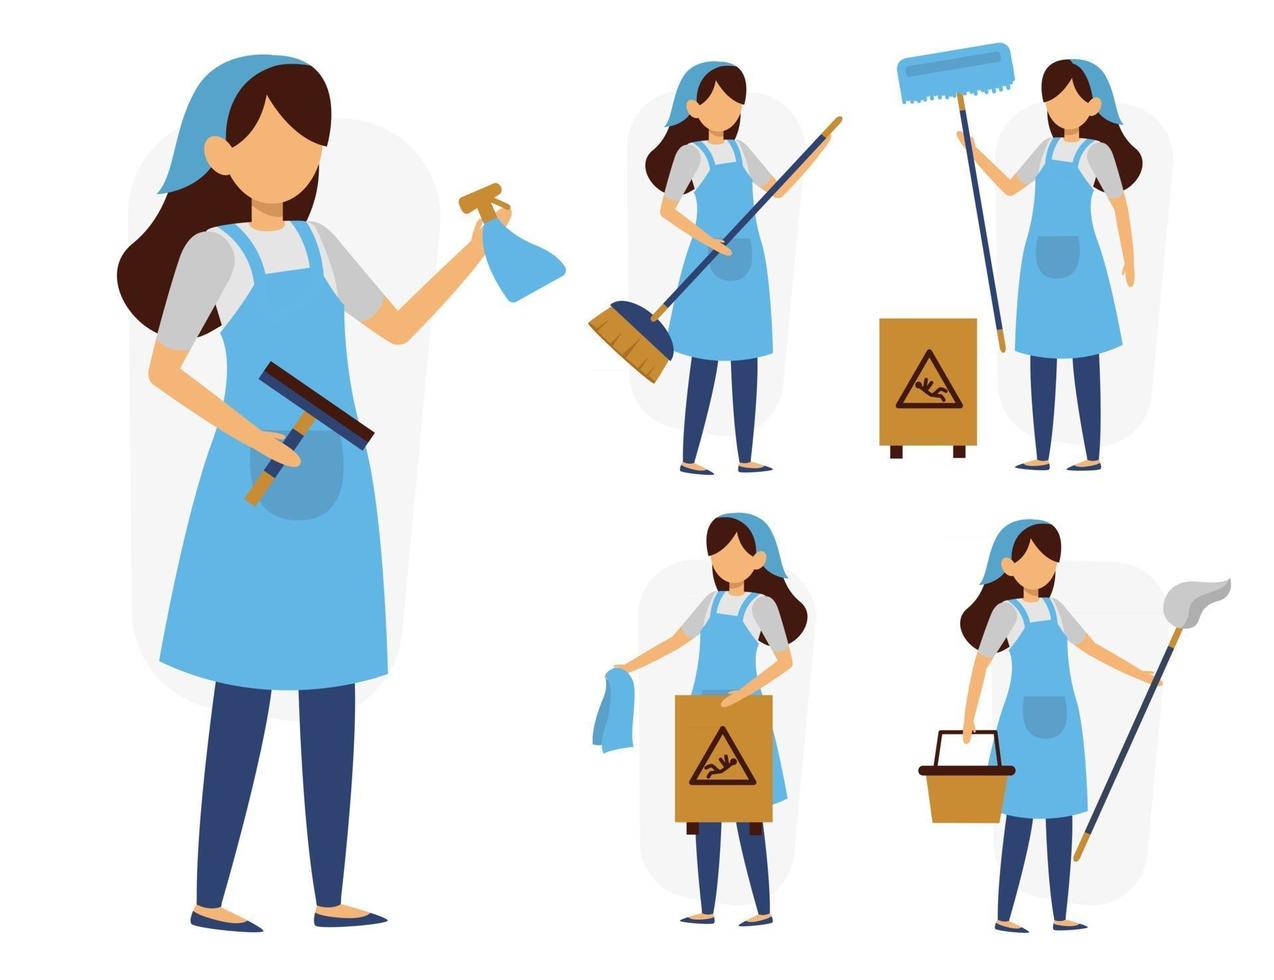 Set of female maid or housekeeper in cartoon characters vector